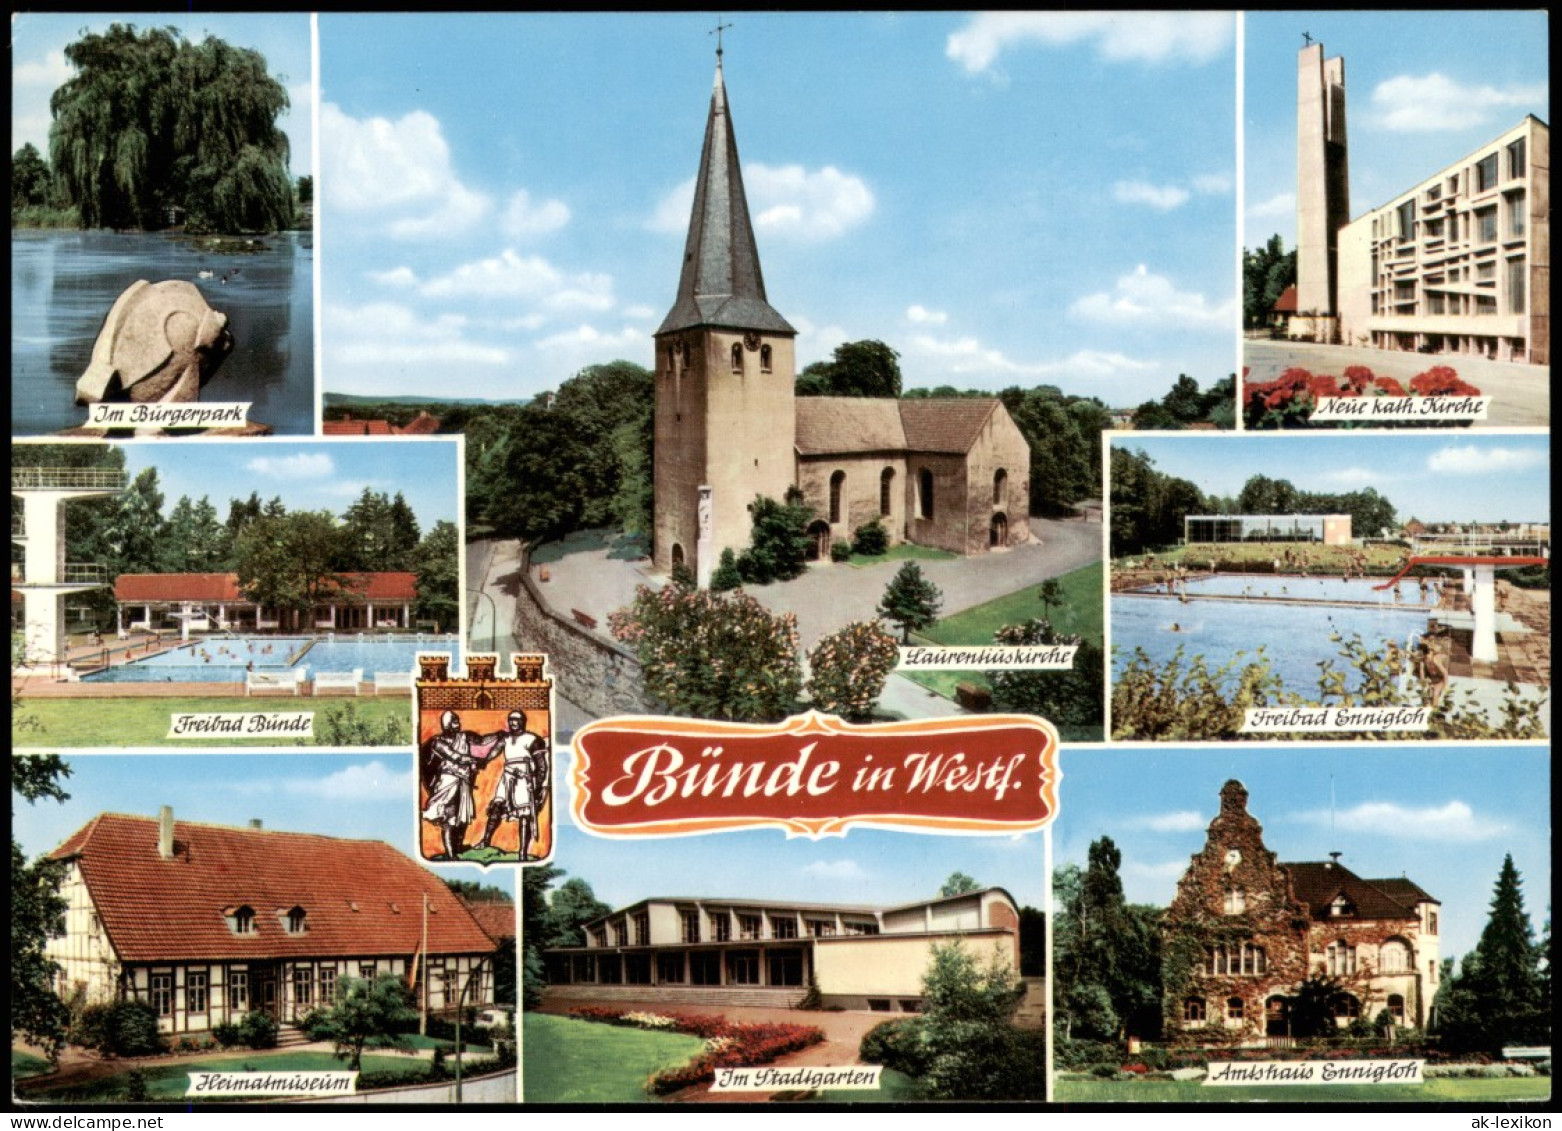 Ansichtskarte Bünde Kirchen, Museum, Amtshaus Uvm 1985 - Bünde